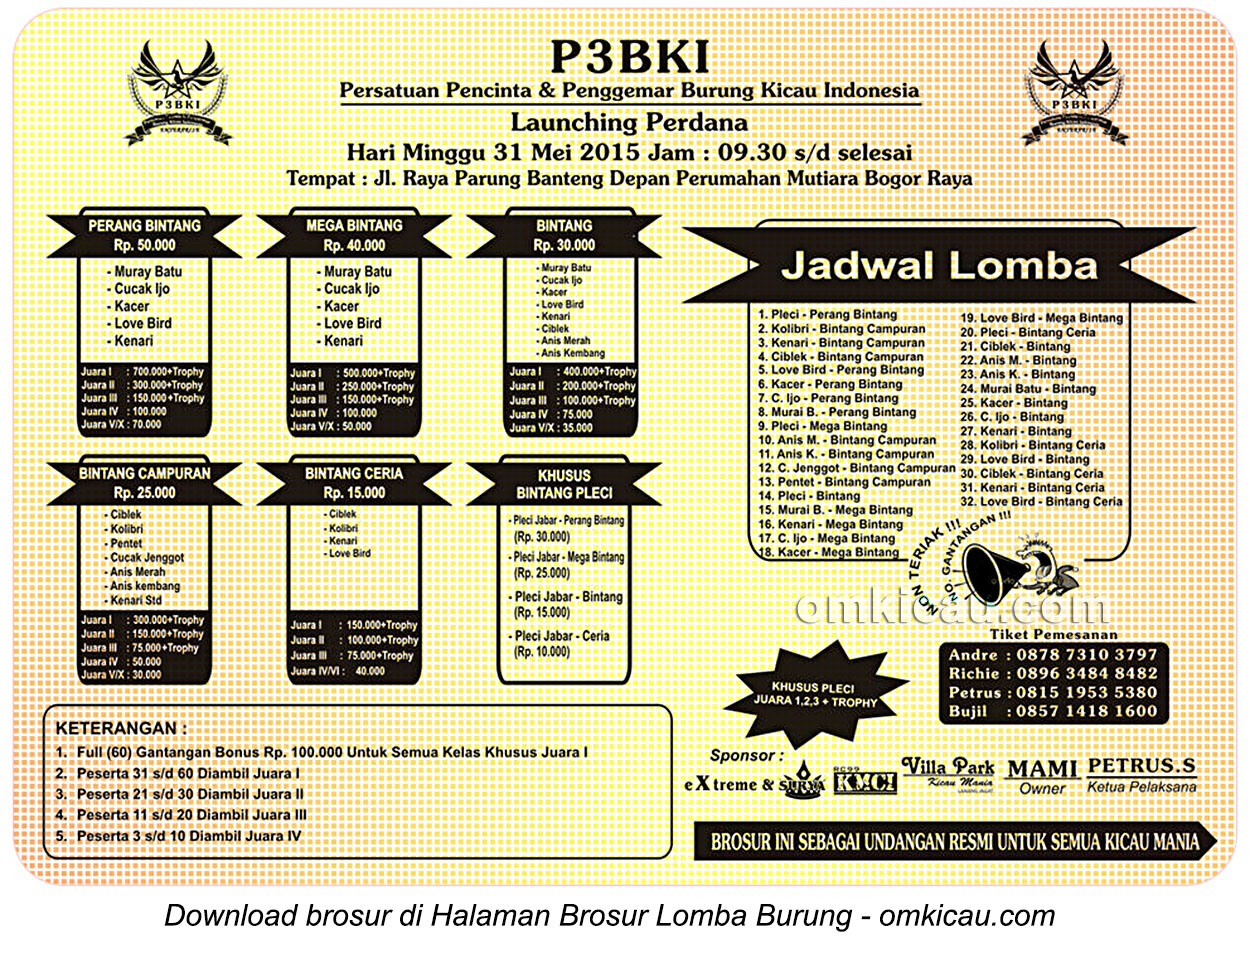 Brosur Lomba Burung Berkicau Launching Perdana P3BKI, Bogor, 31 Mei 2015